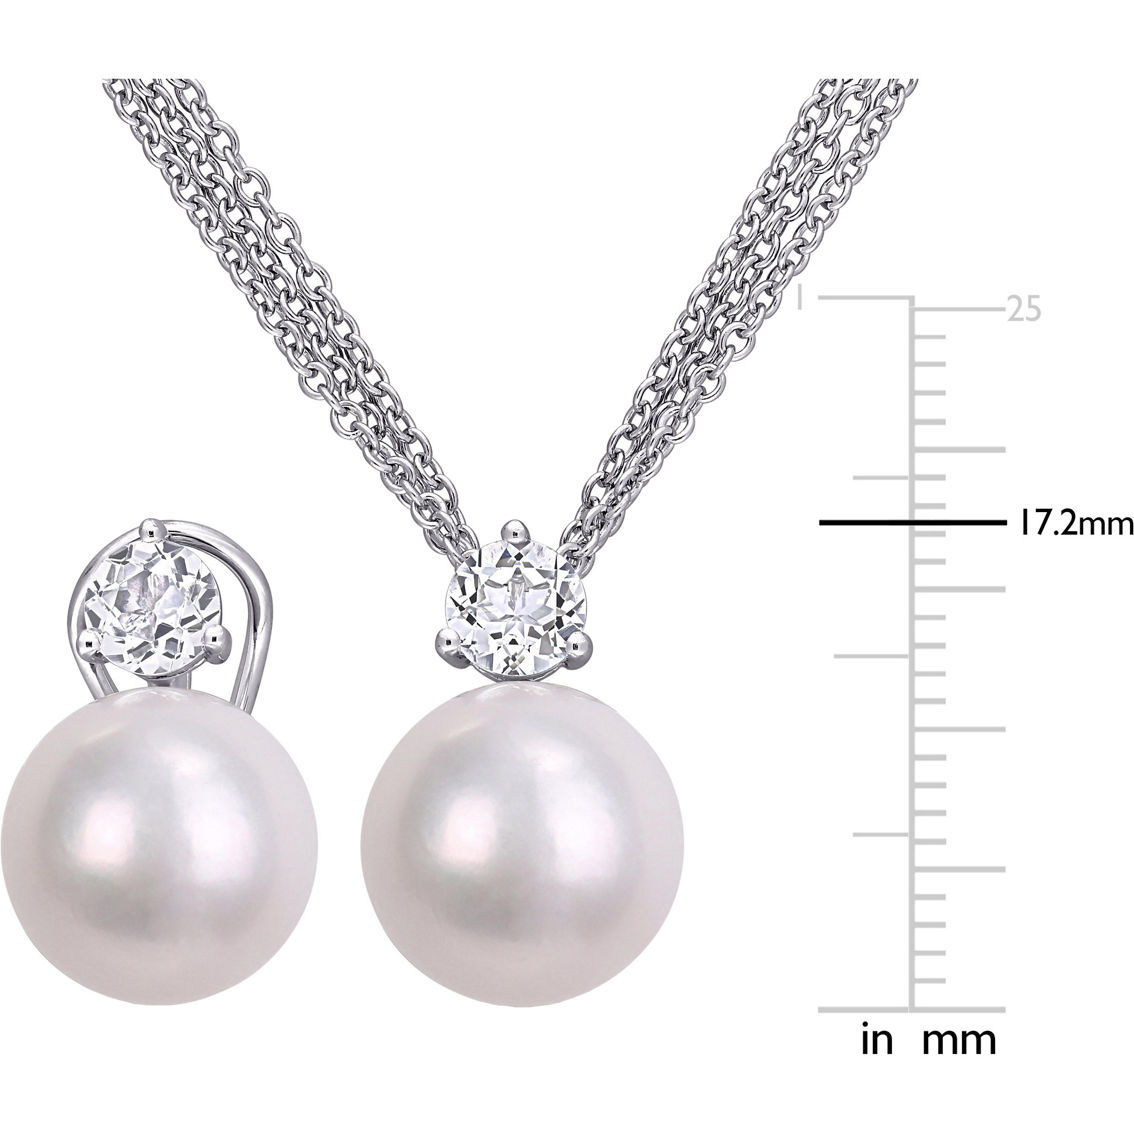 Sofia B. Freshwater Pearl White Topaz Earrings & Triple Strand Necklace 2 pc. Set - Image 3 of 3